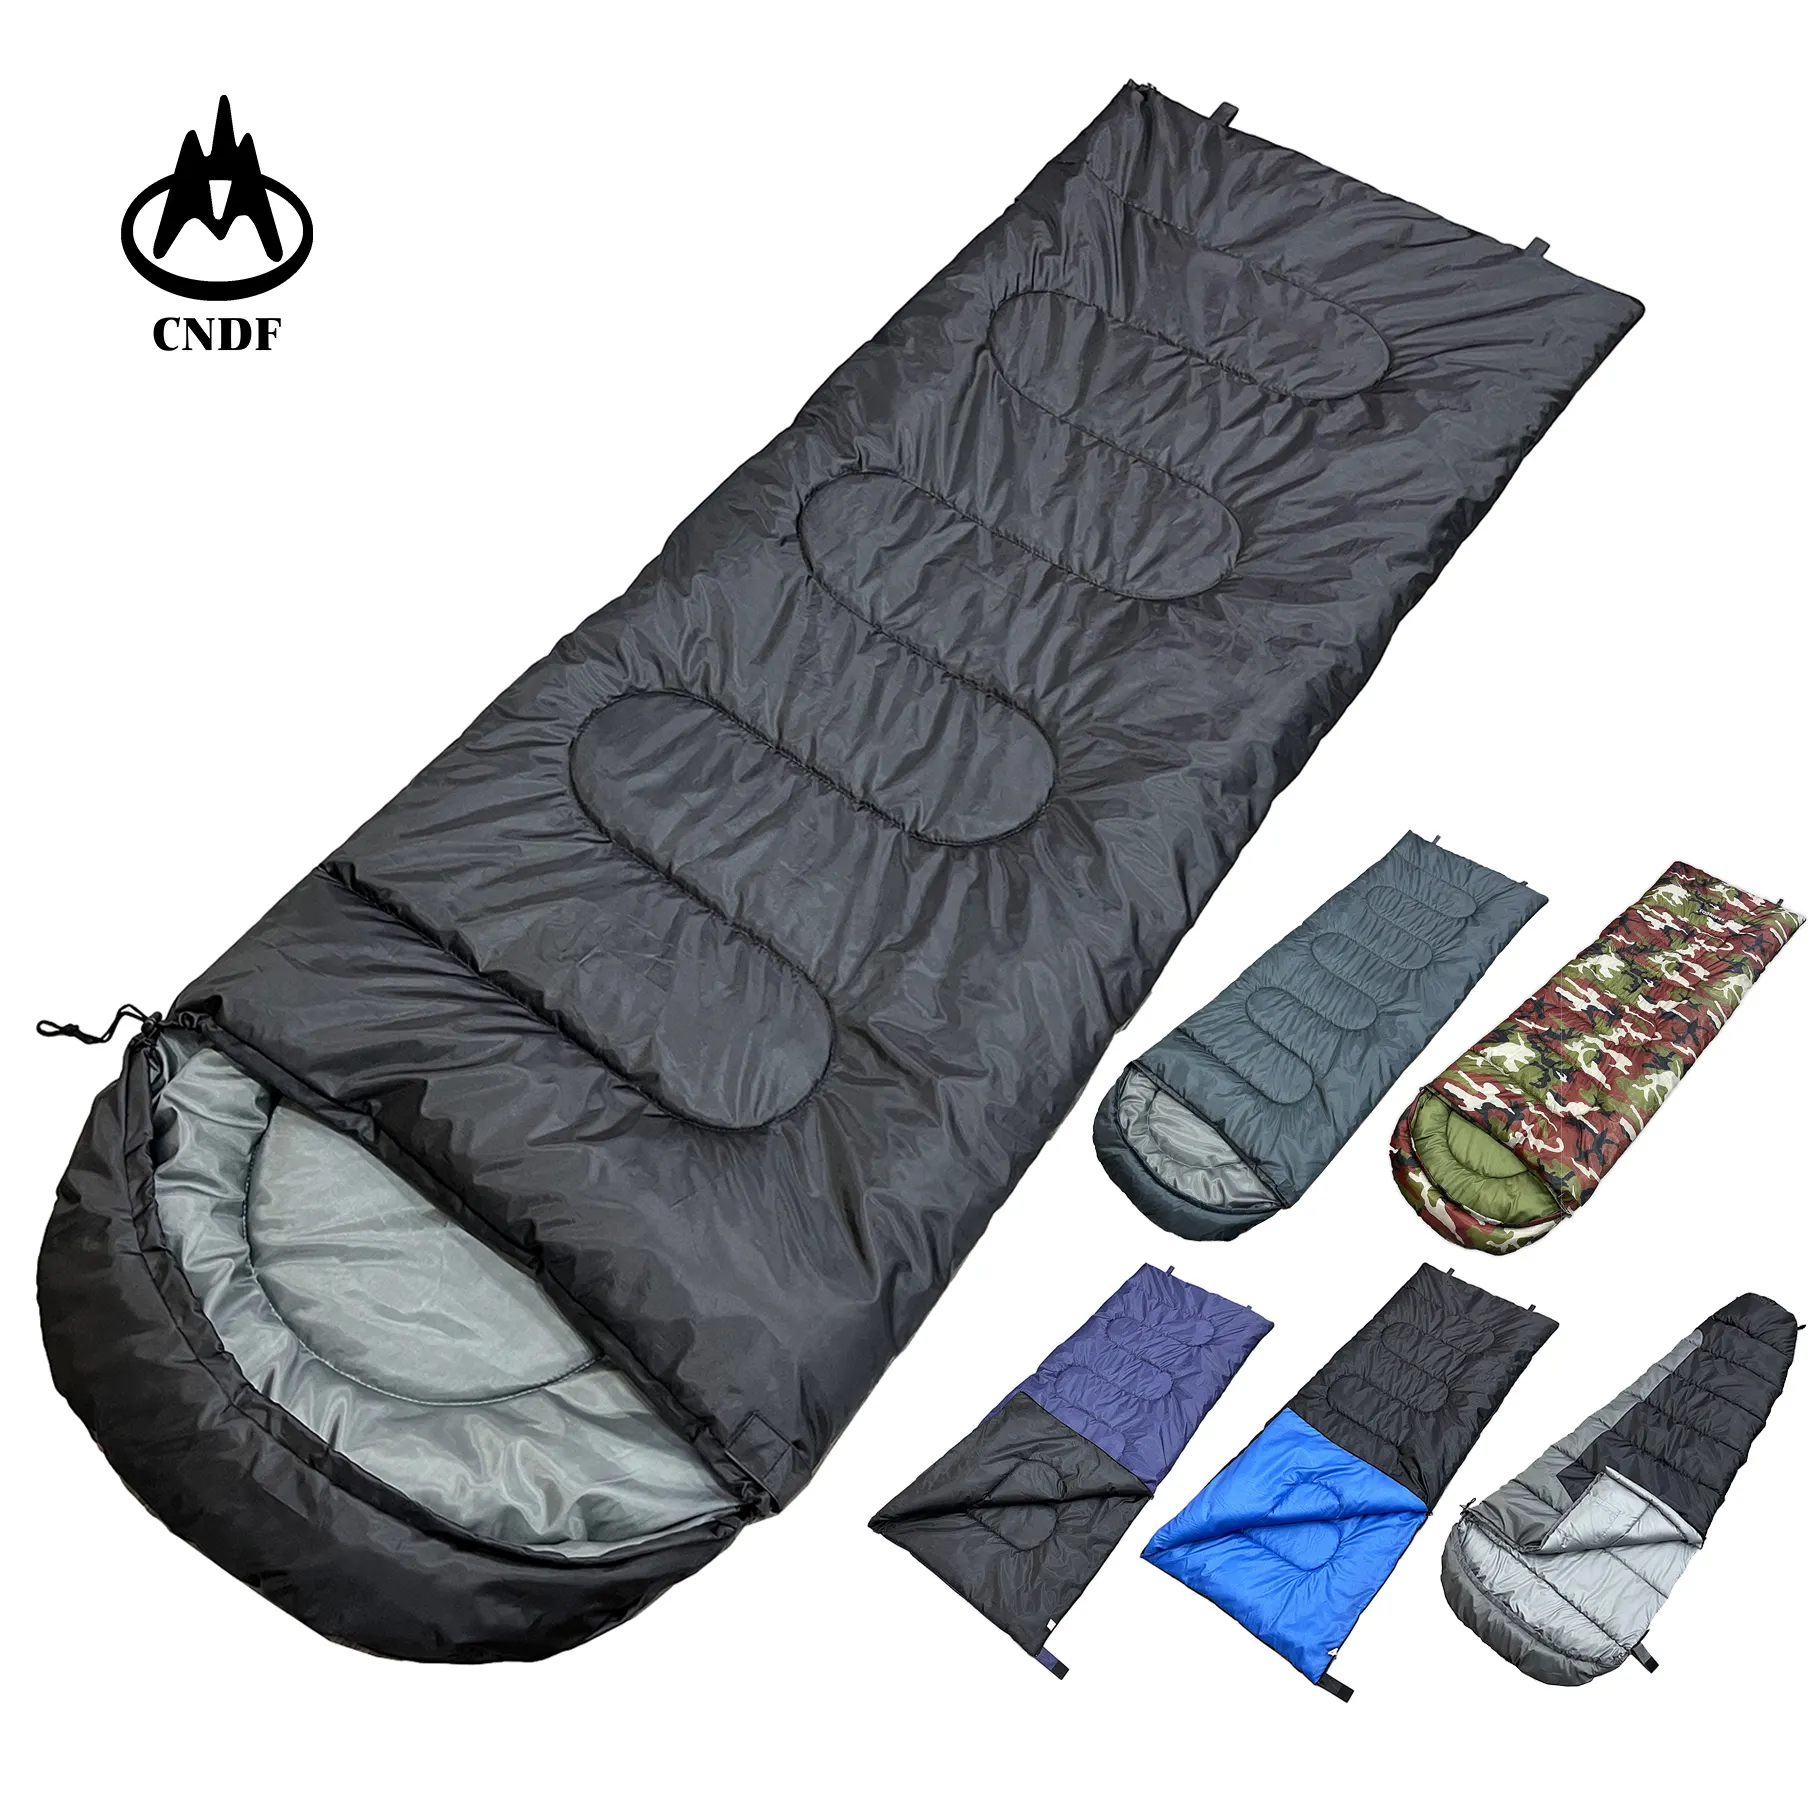 Hot Sale Waterproof Warm Cool Weather All Season Envelop/Mummy Sleeping Bag Outdoor Camping